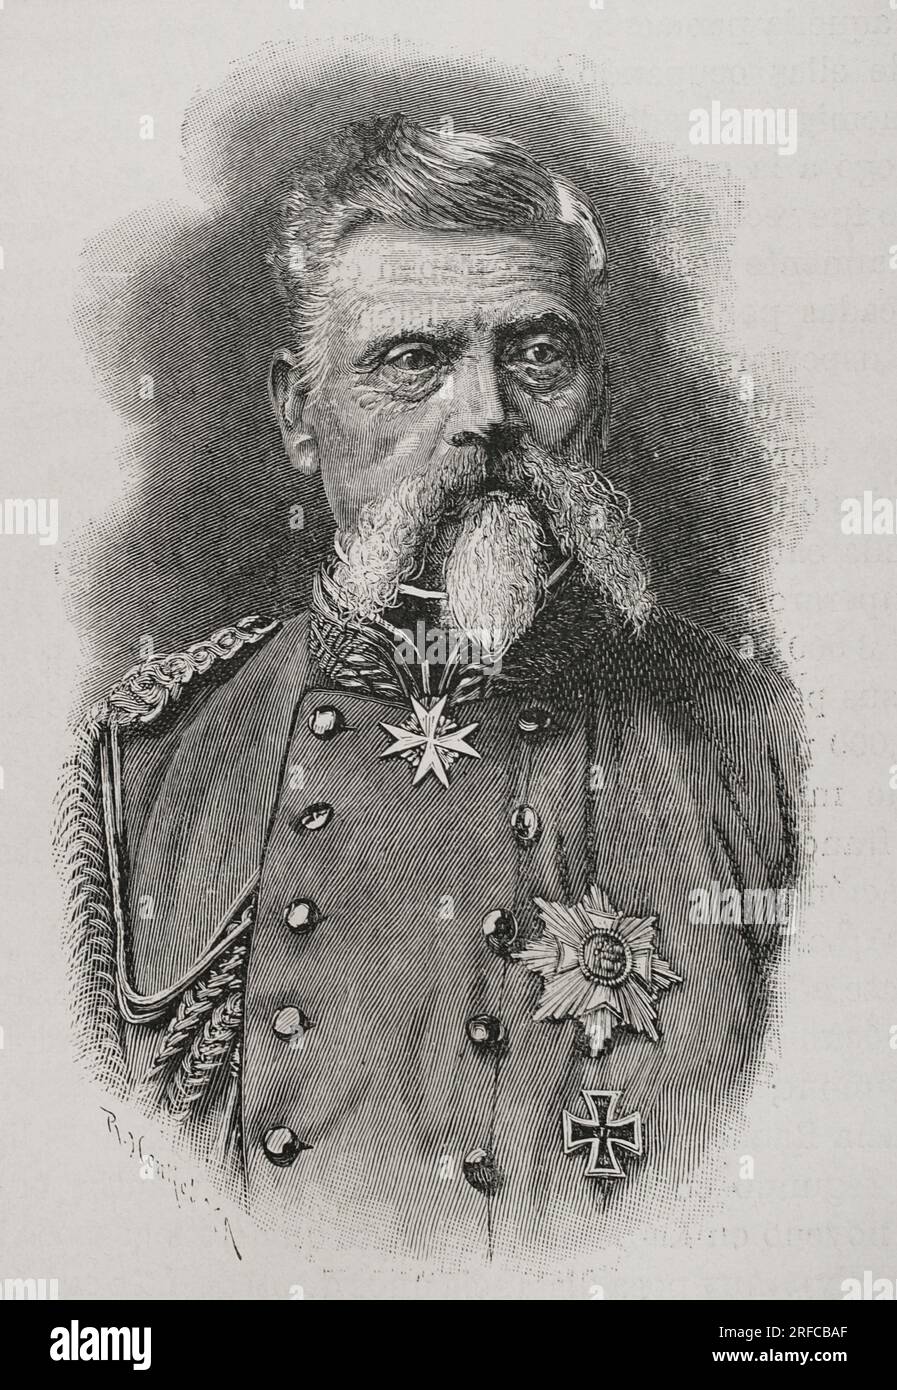 Ludwig von der Tann (1815-1881). Bavarian general. Portrait. Engraving. 'Historia de la Guerra Franco-Alemana de 1870-1871'. Published in Barcelona, 1891. Stock Photo